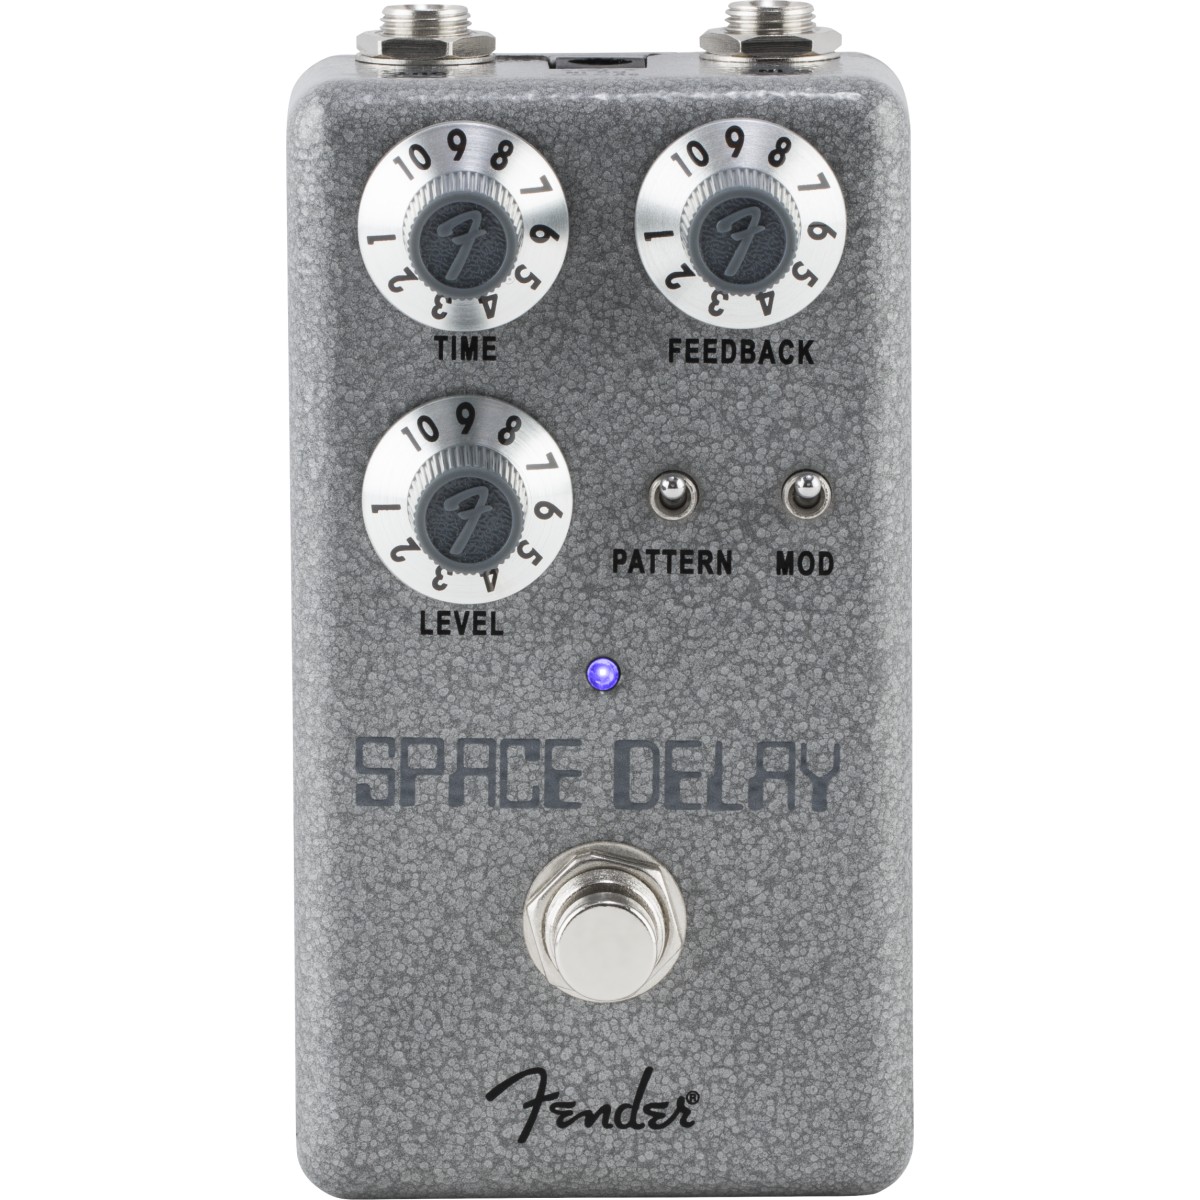 Pedale Fender Hammertone Space Delay 0234577000